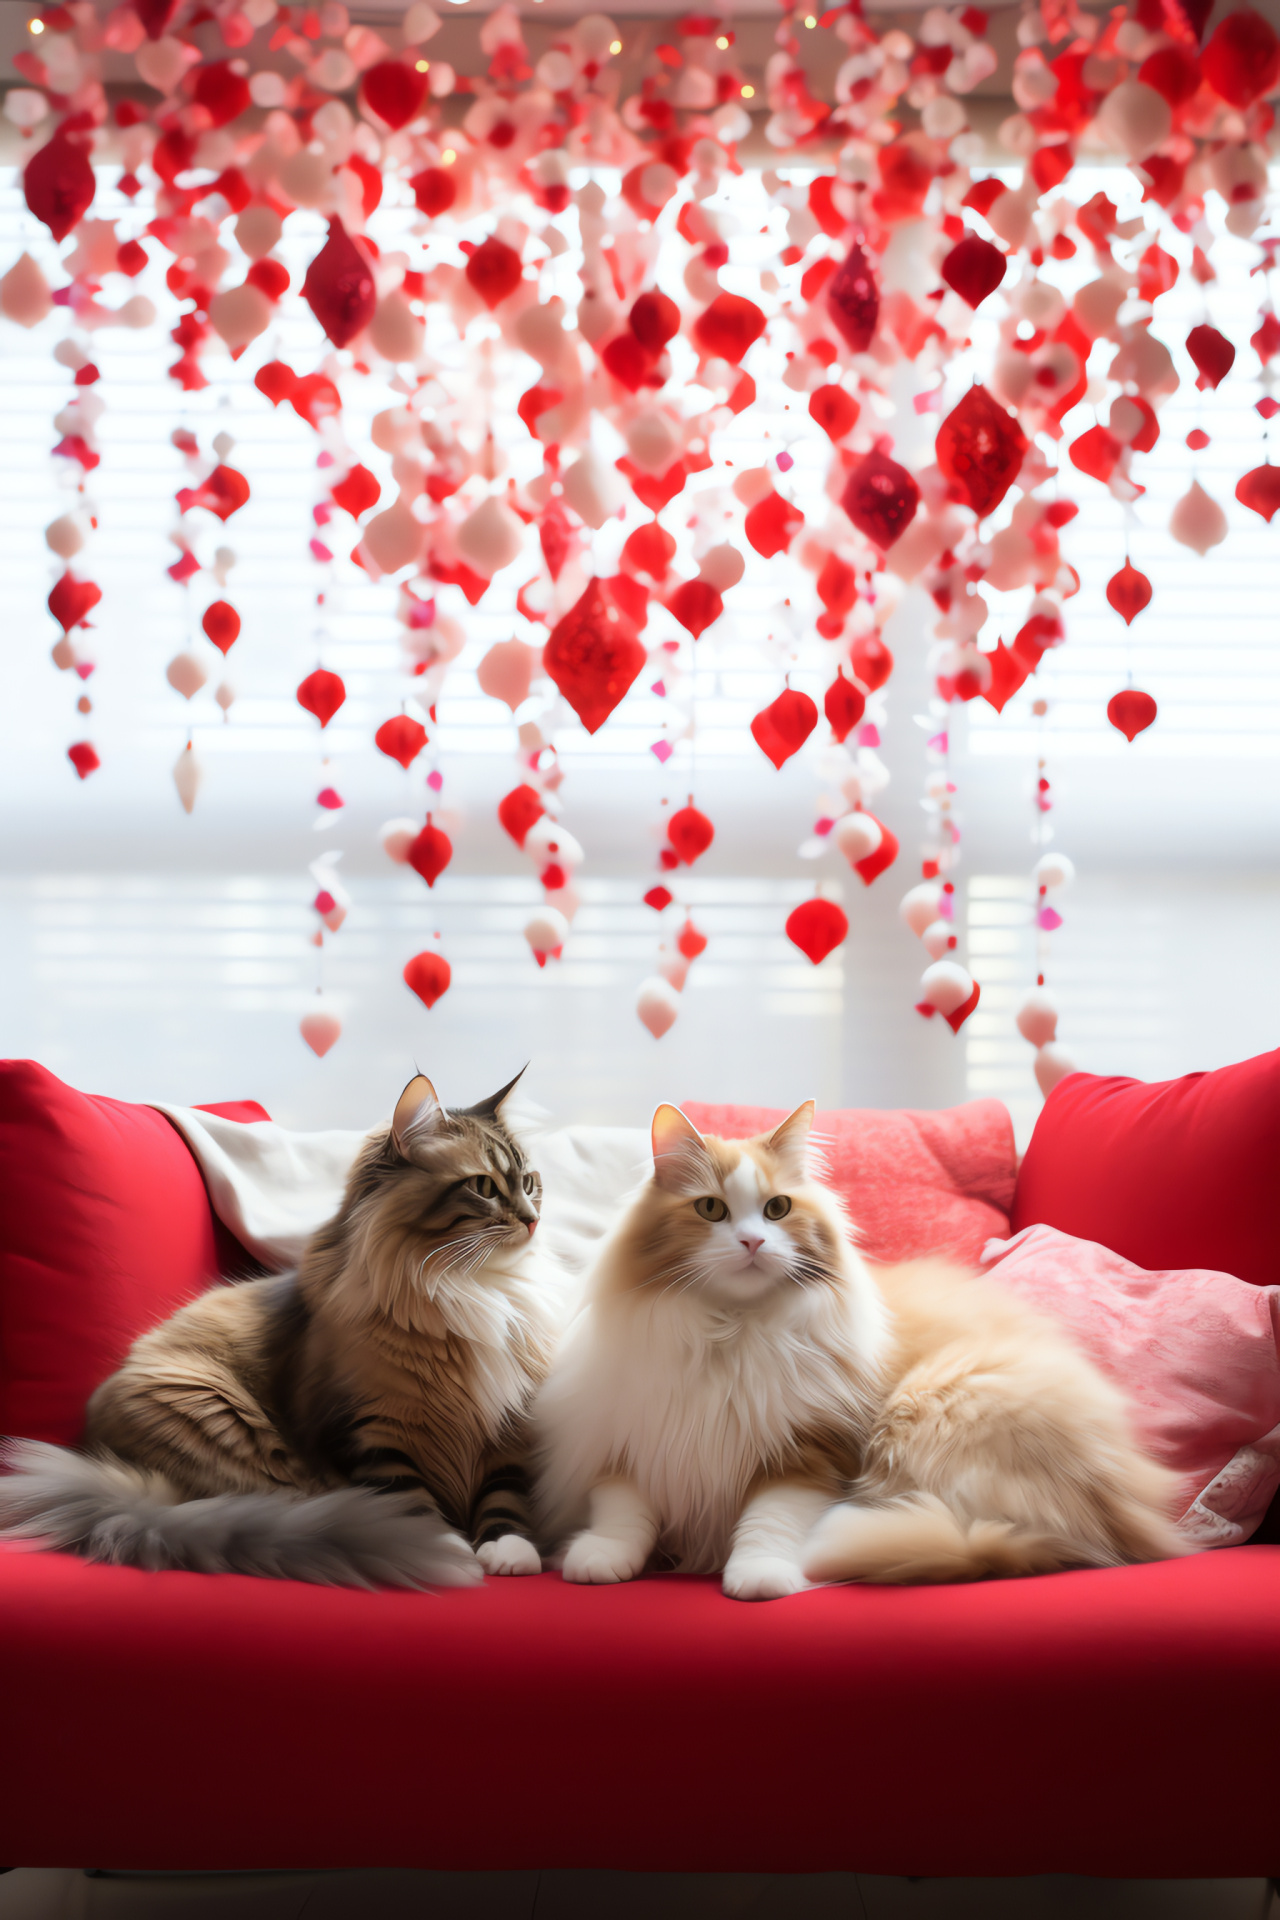 Residential cat adornments, Domestic animal pairs, Household celebration, Symbolic festoons, Crimson window treatments, HD Phone Image